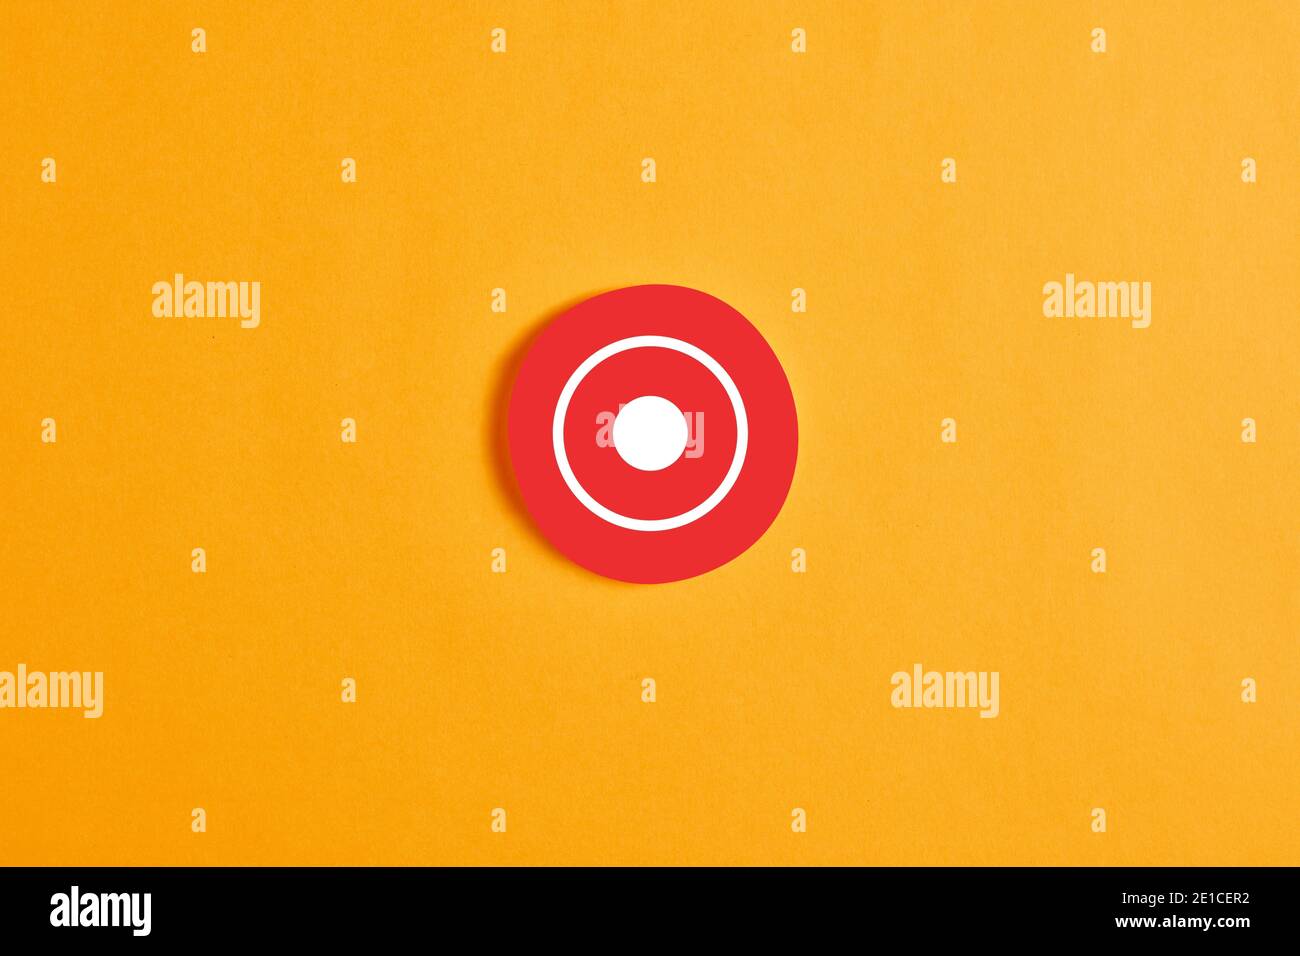 Círculo rojo redondo con un botón de grabación (rec) o icono sobre fondo amarillo. Foto de stock